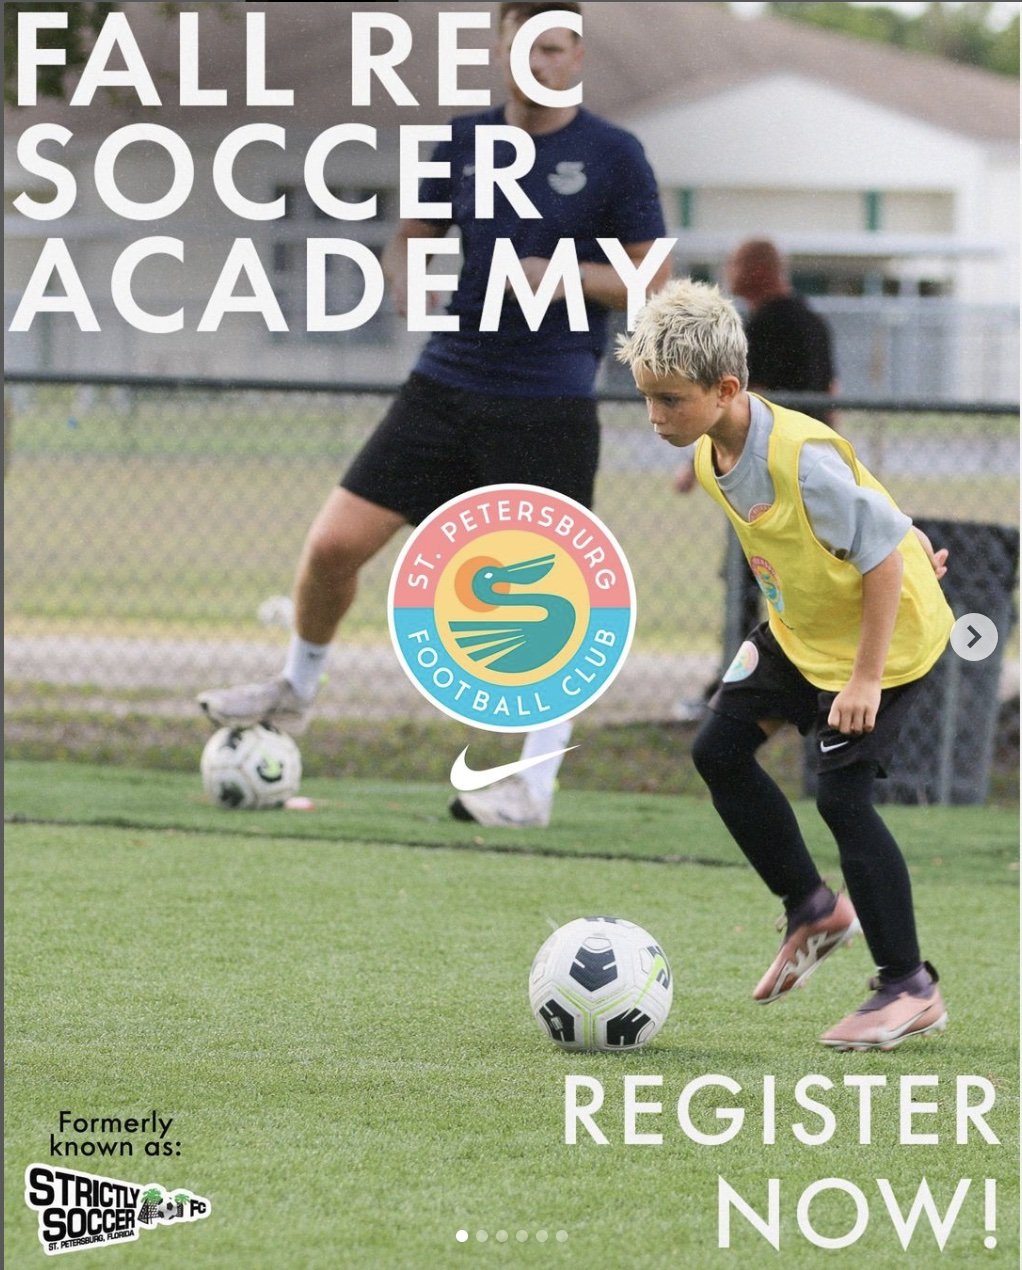 Fall Recreational Academy Registration Open